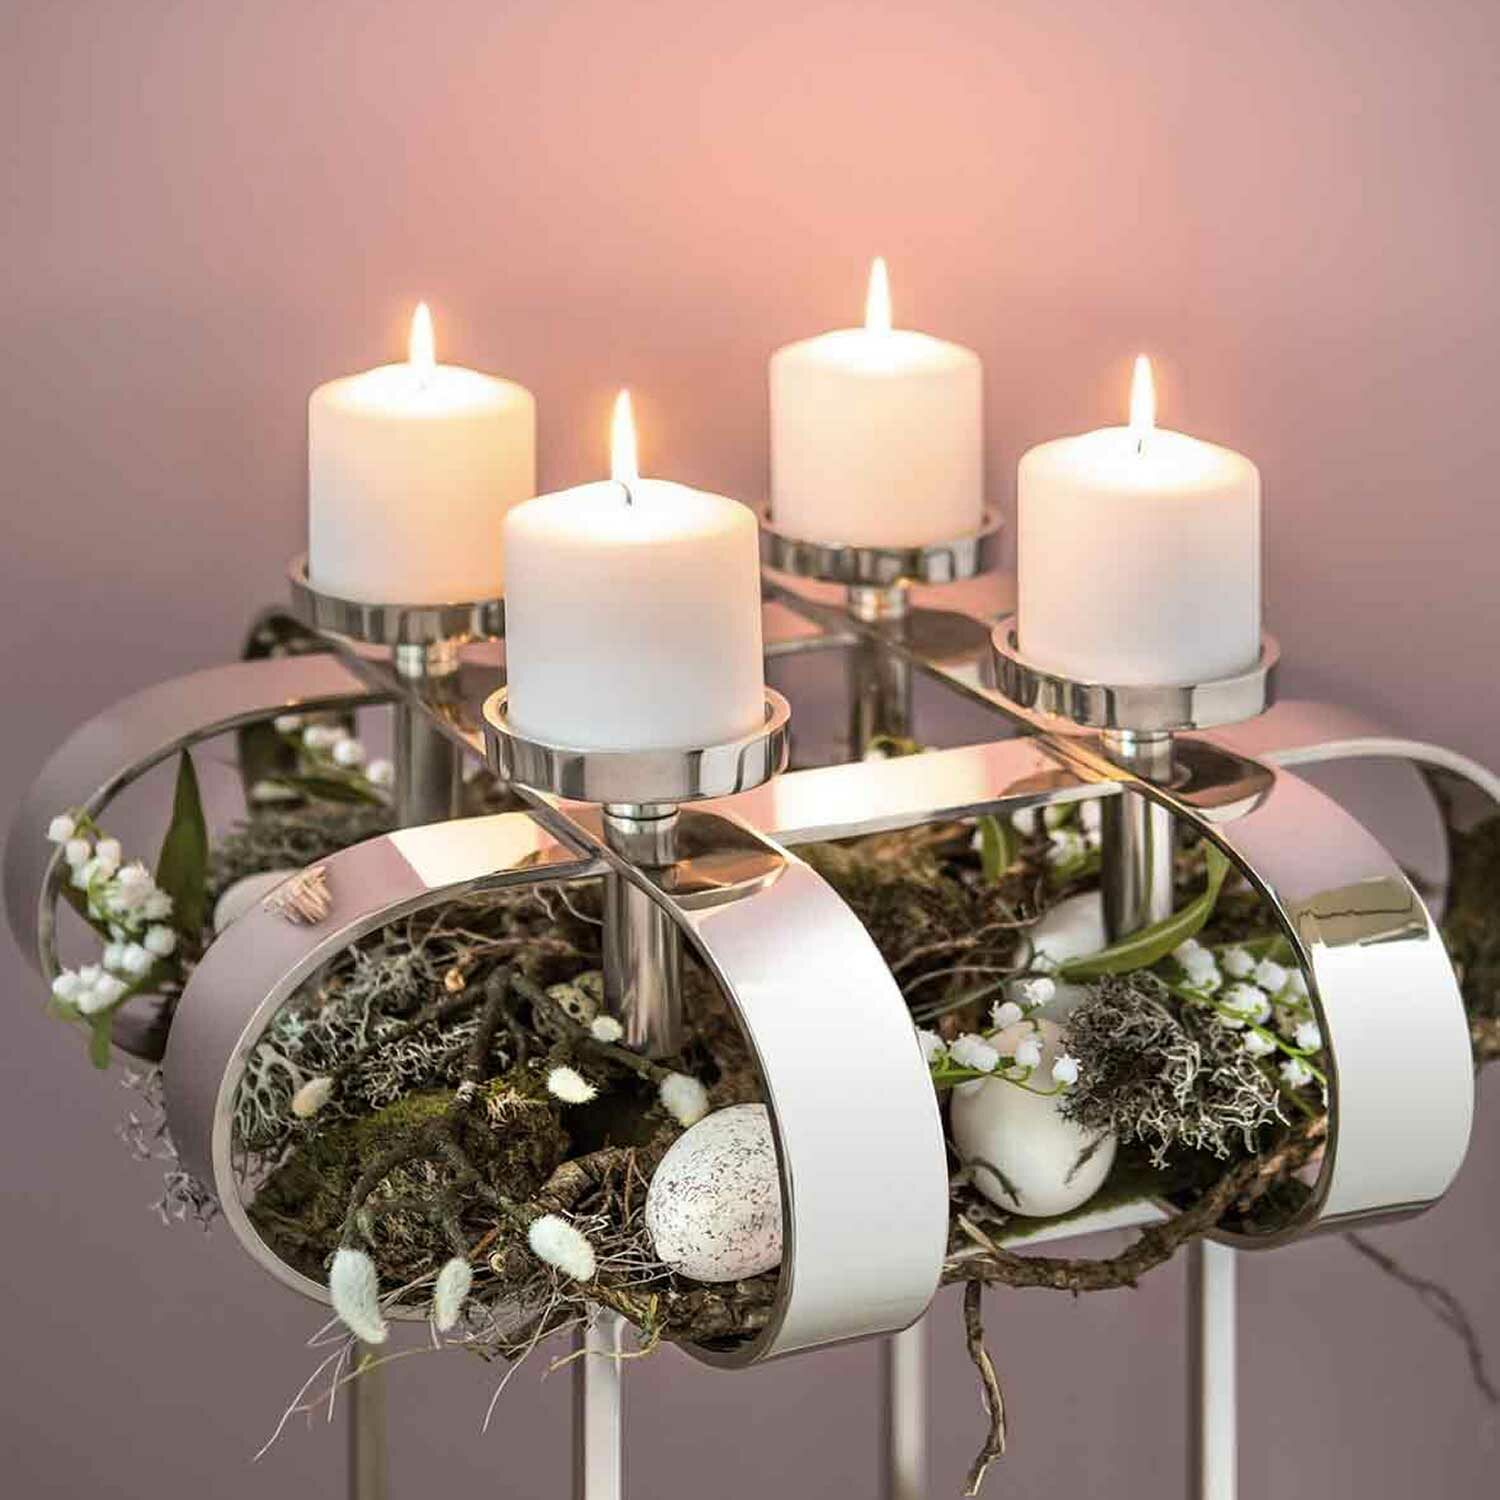 GORDEN candlestick wreath